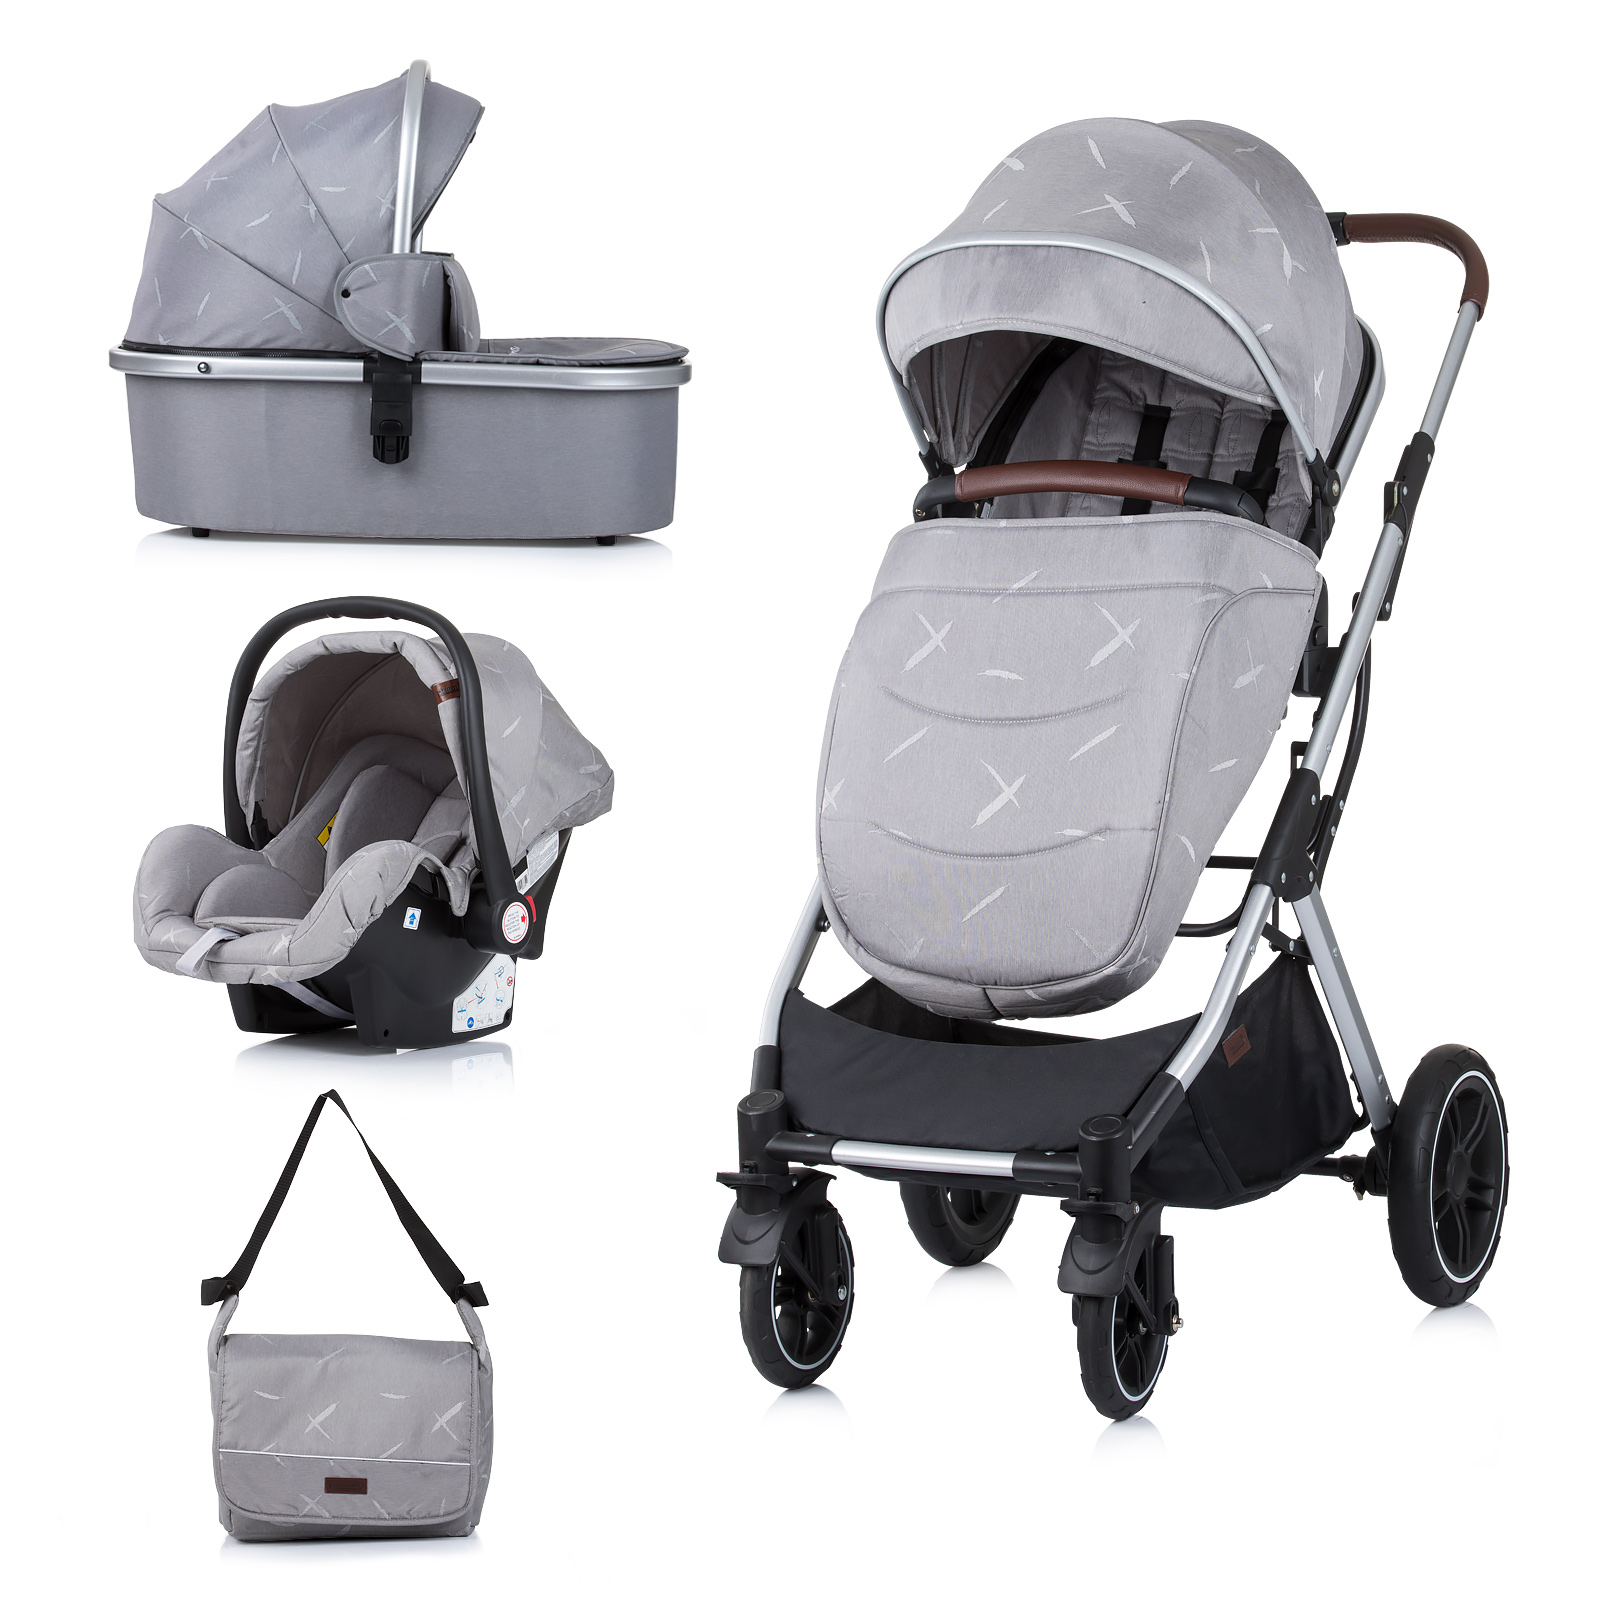 Stroller & Carseat Set “Zara” – Platinum